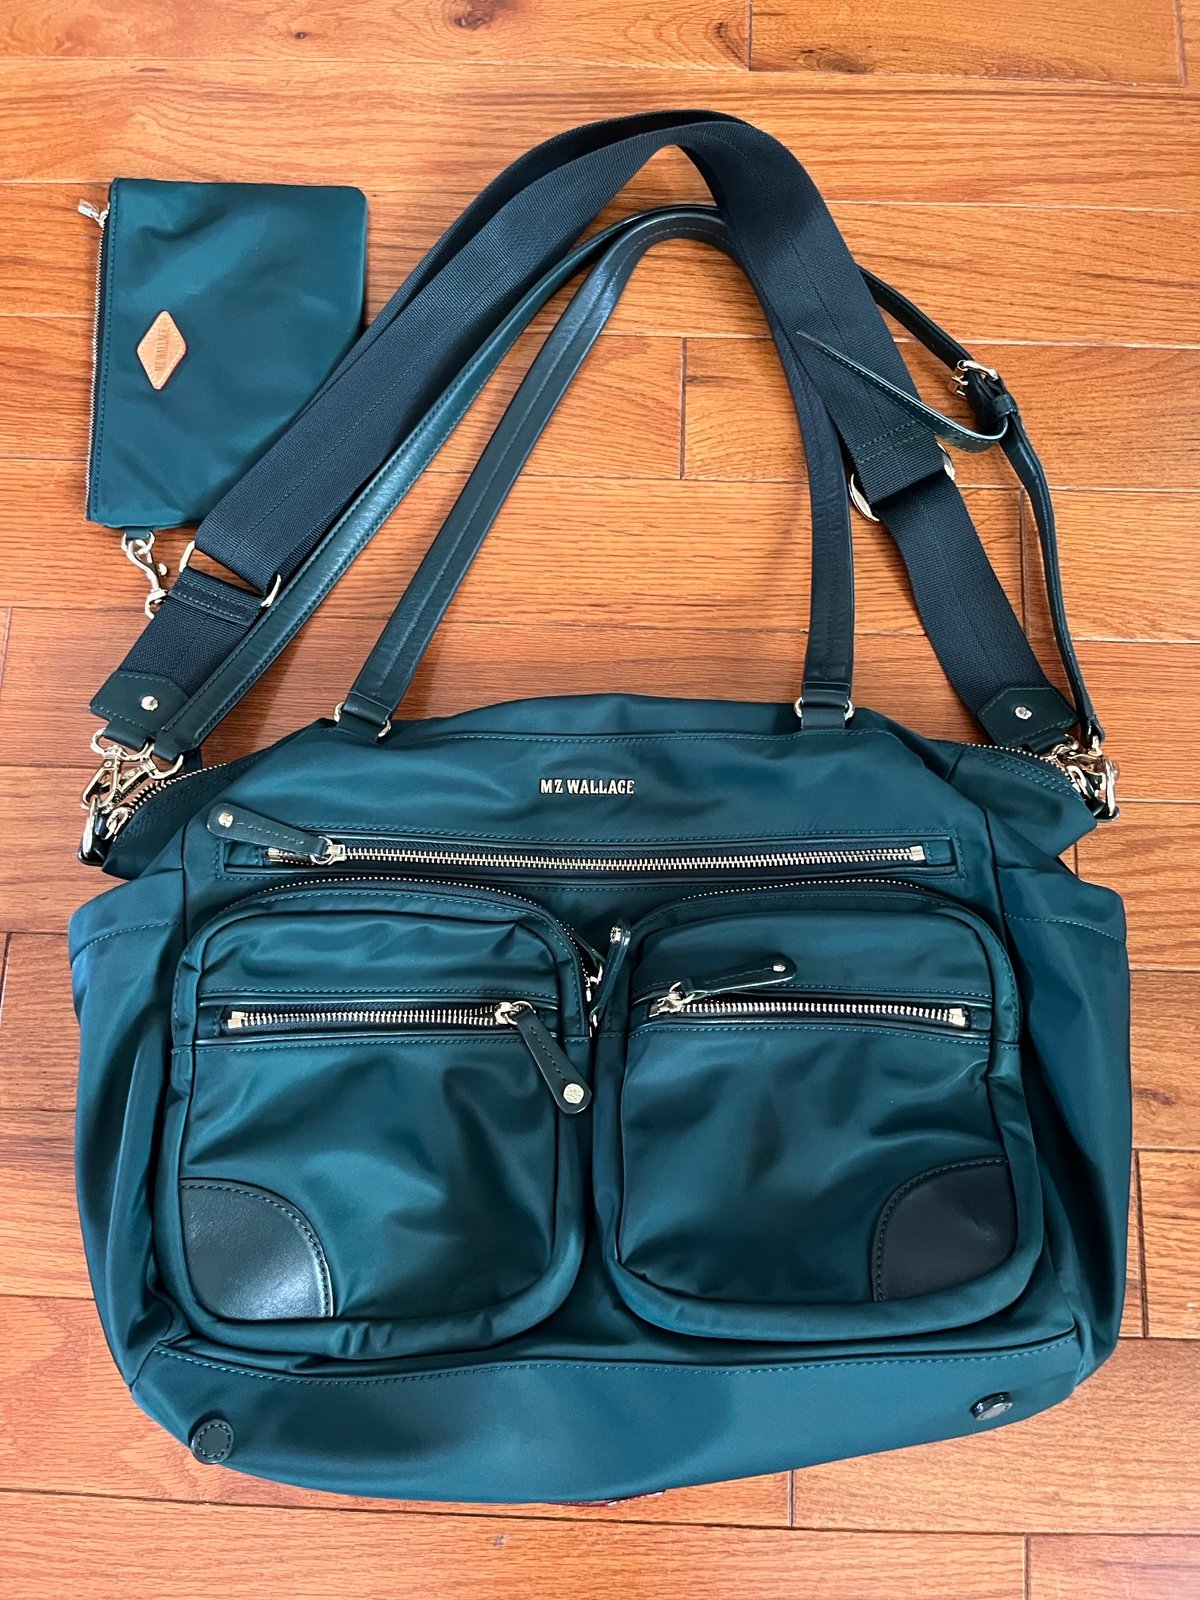 Emerald Green Large Bag with many pockets and optional luggage slot 9eGLpAHFJ